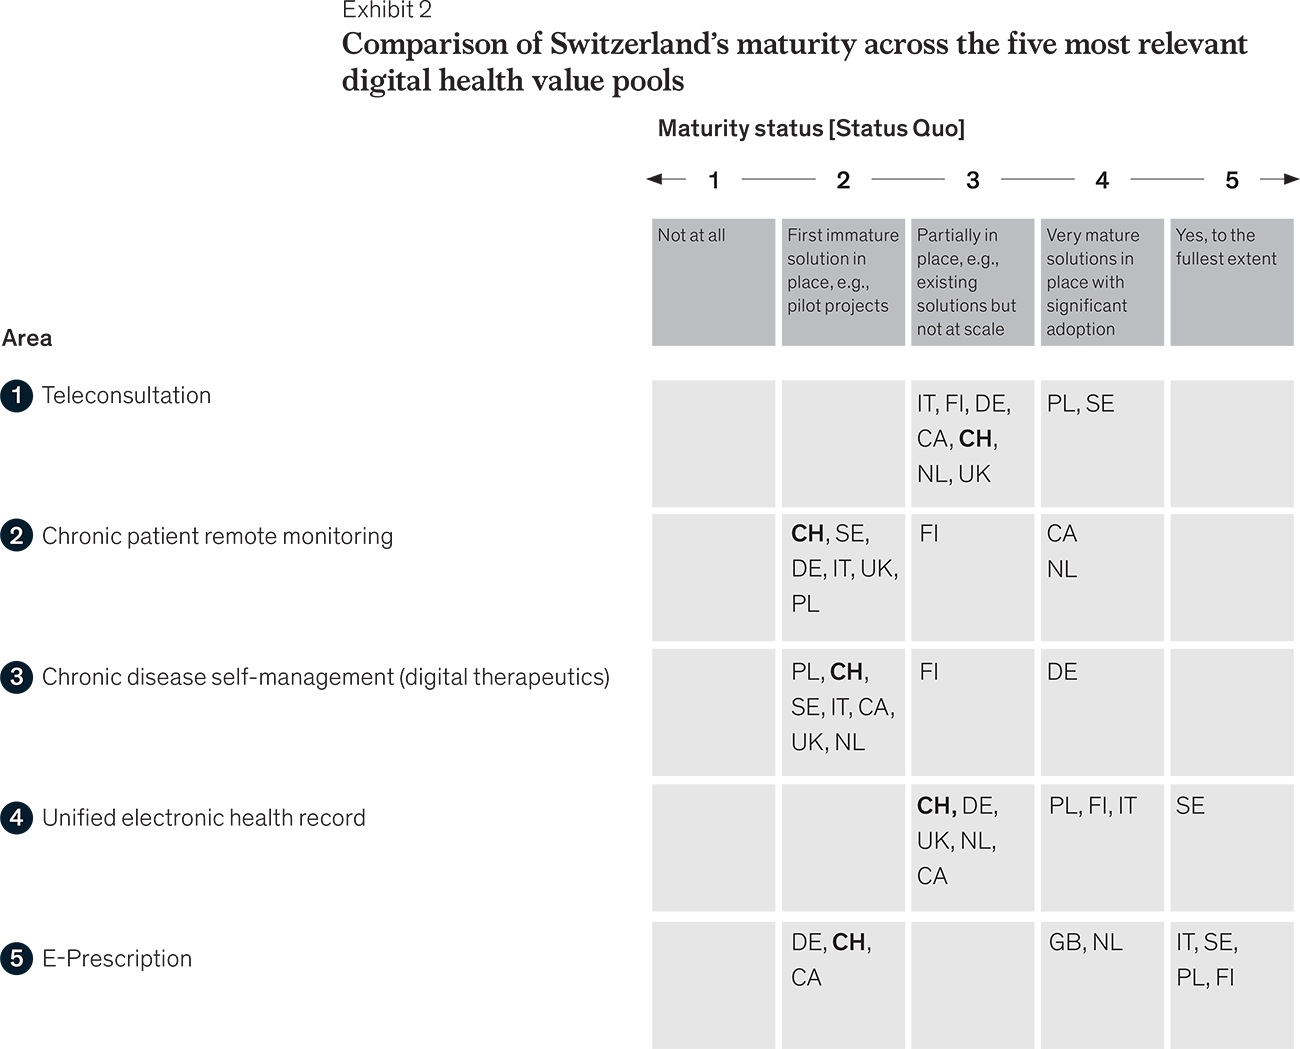 Exhibit 2 - Comparison of Switzerland’s maturity across the five most relevant digital health value pools